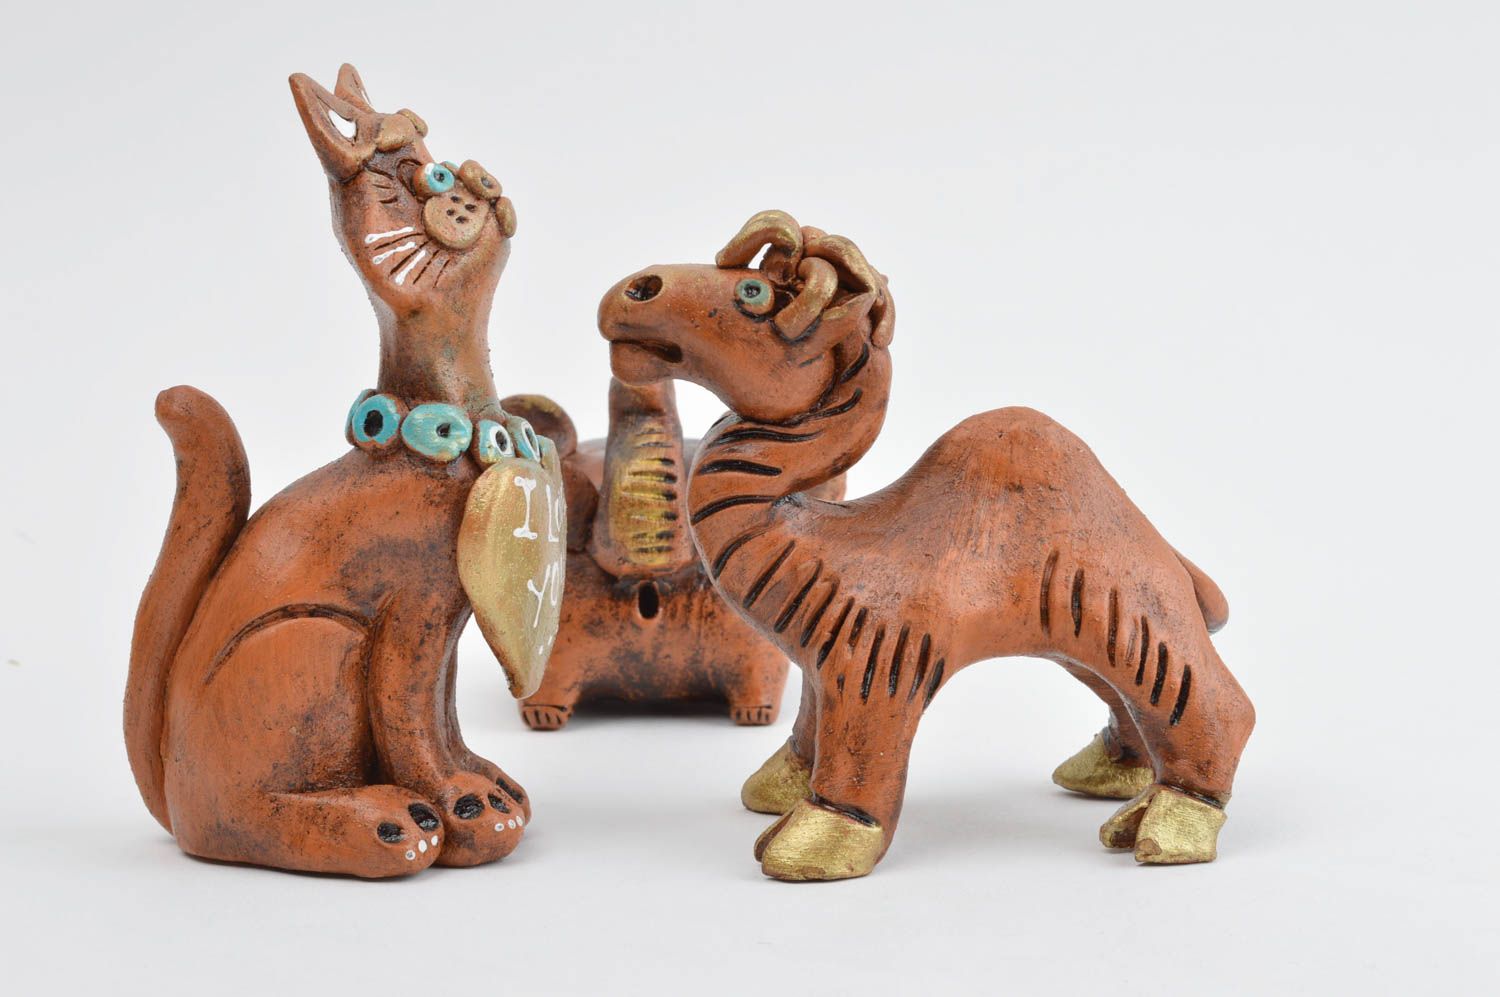 Handmade decorations ceramic figurines animal figurines for decorative use only photo 4